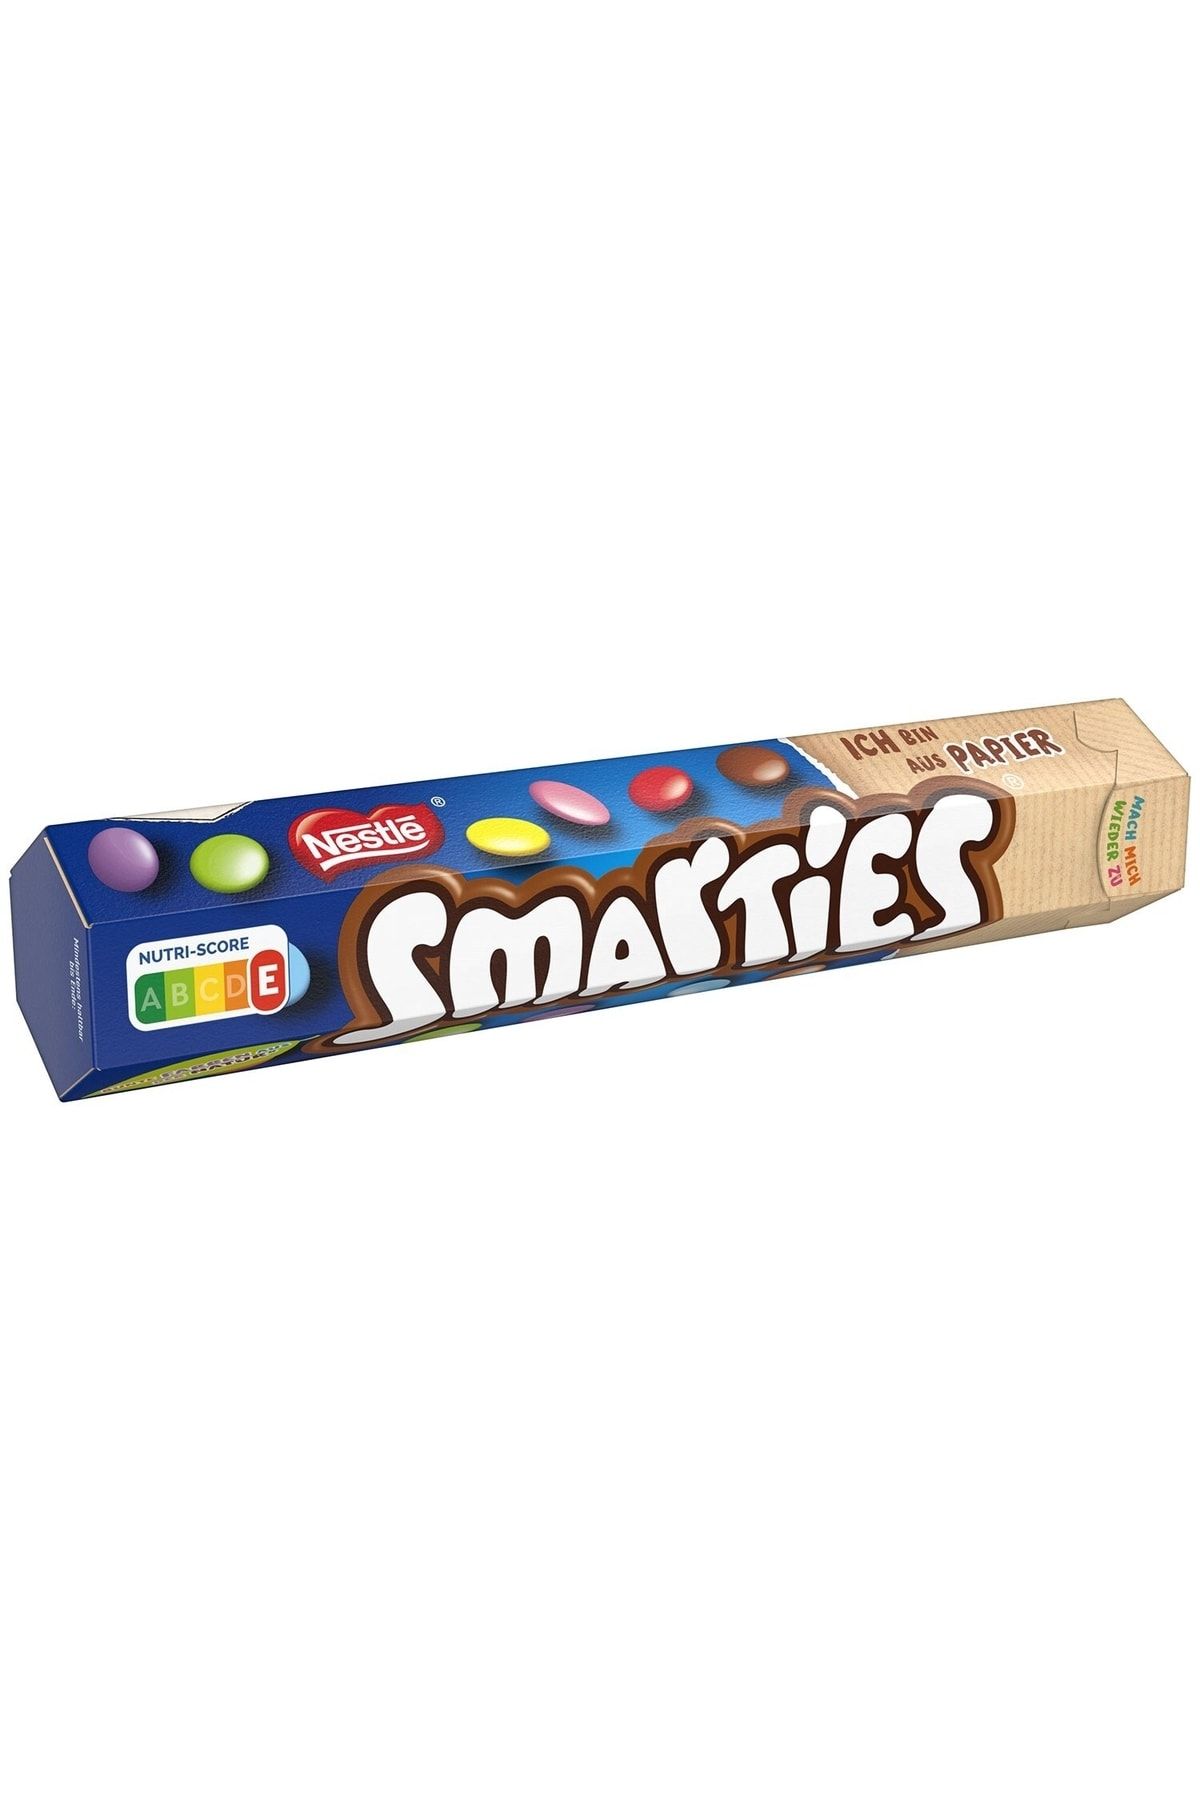 Nestle Smarties 130g